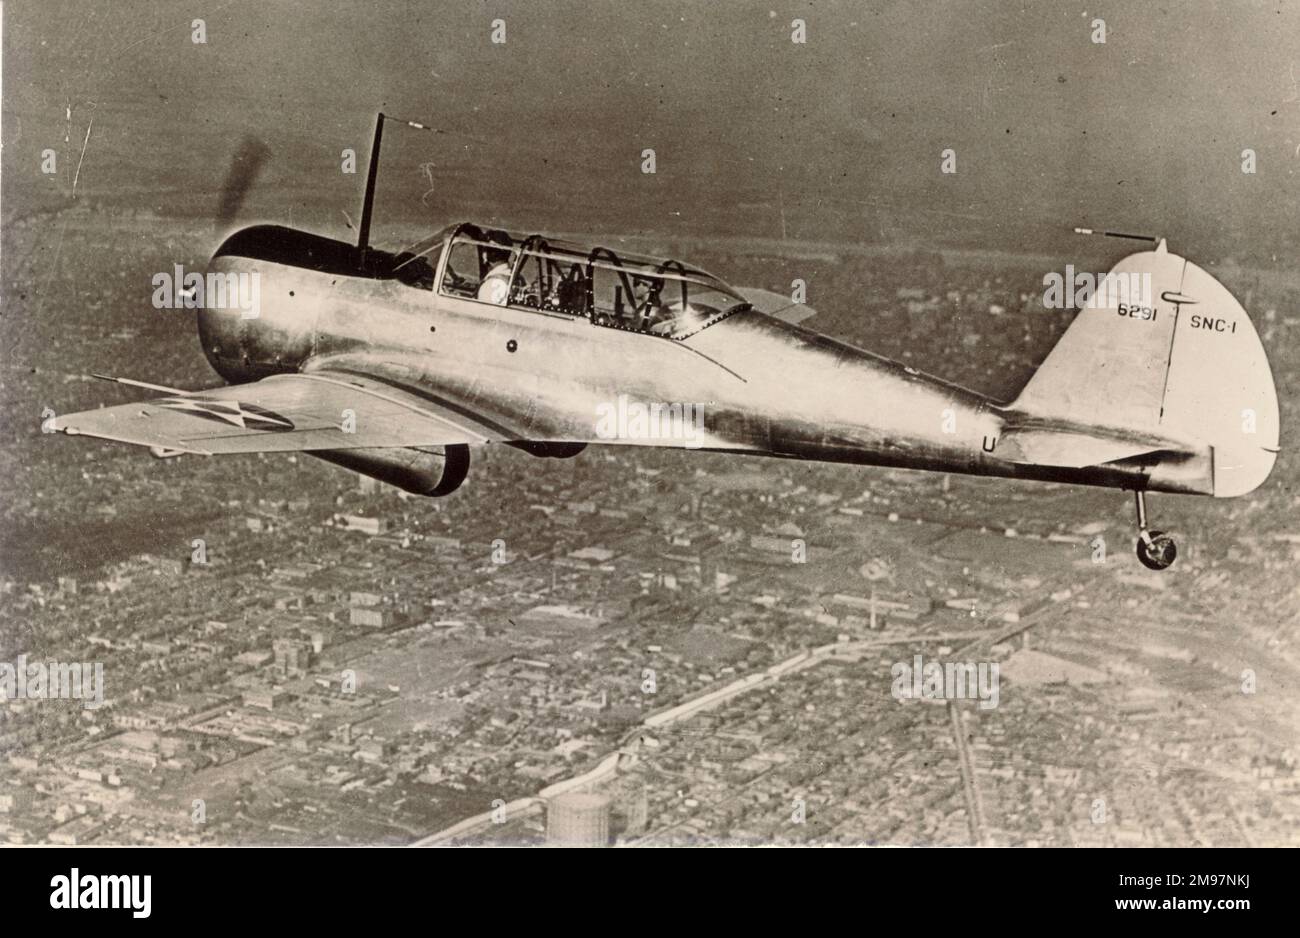 Curtiss CW-22 oder SNC-1 Falcon, 6291. Stockfoto